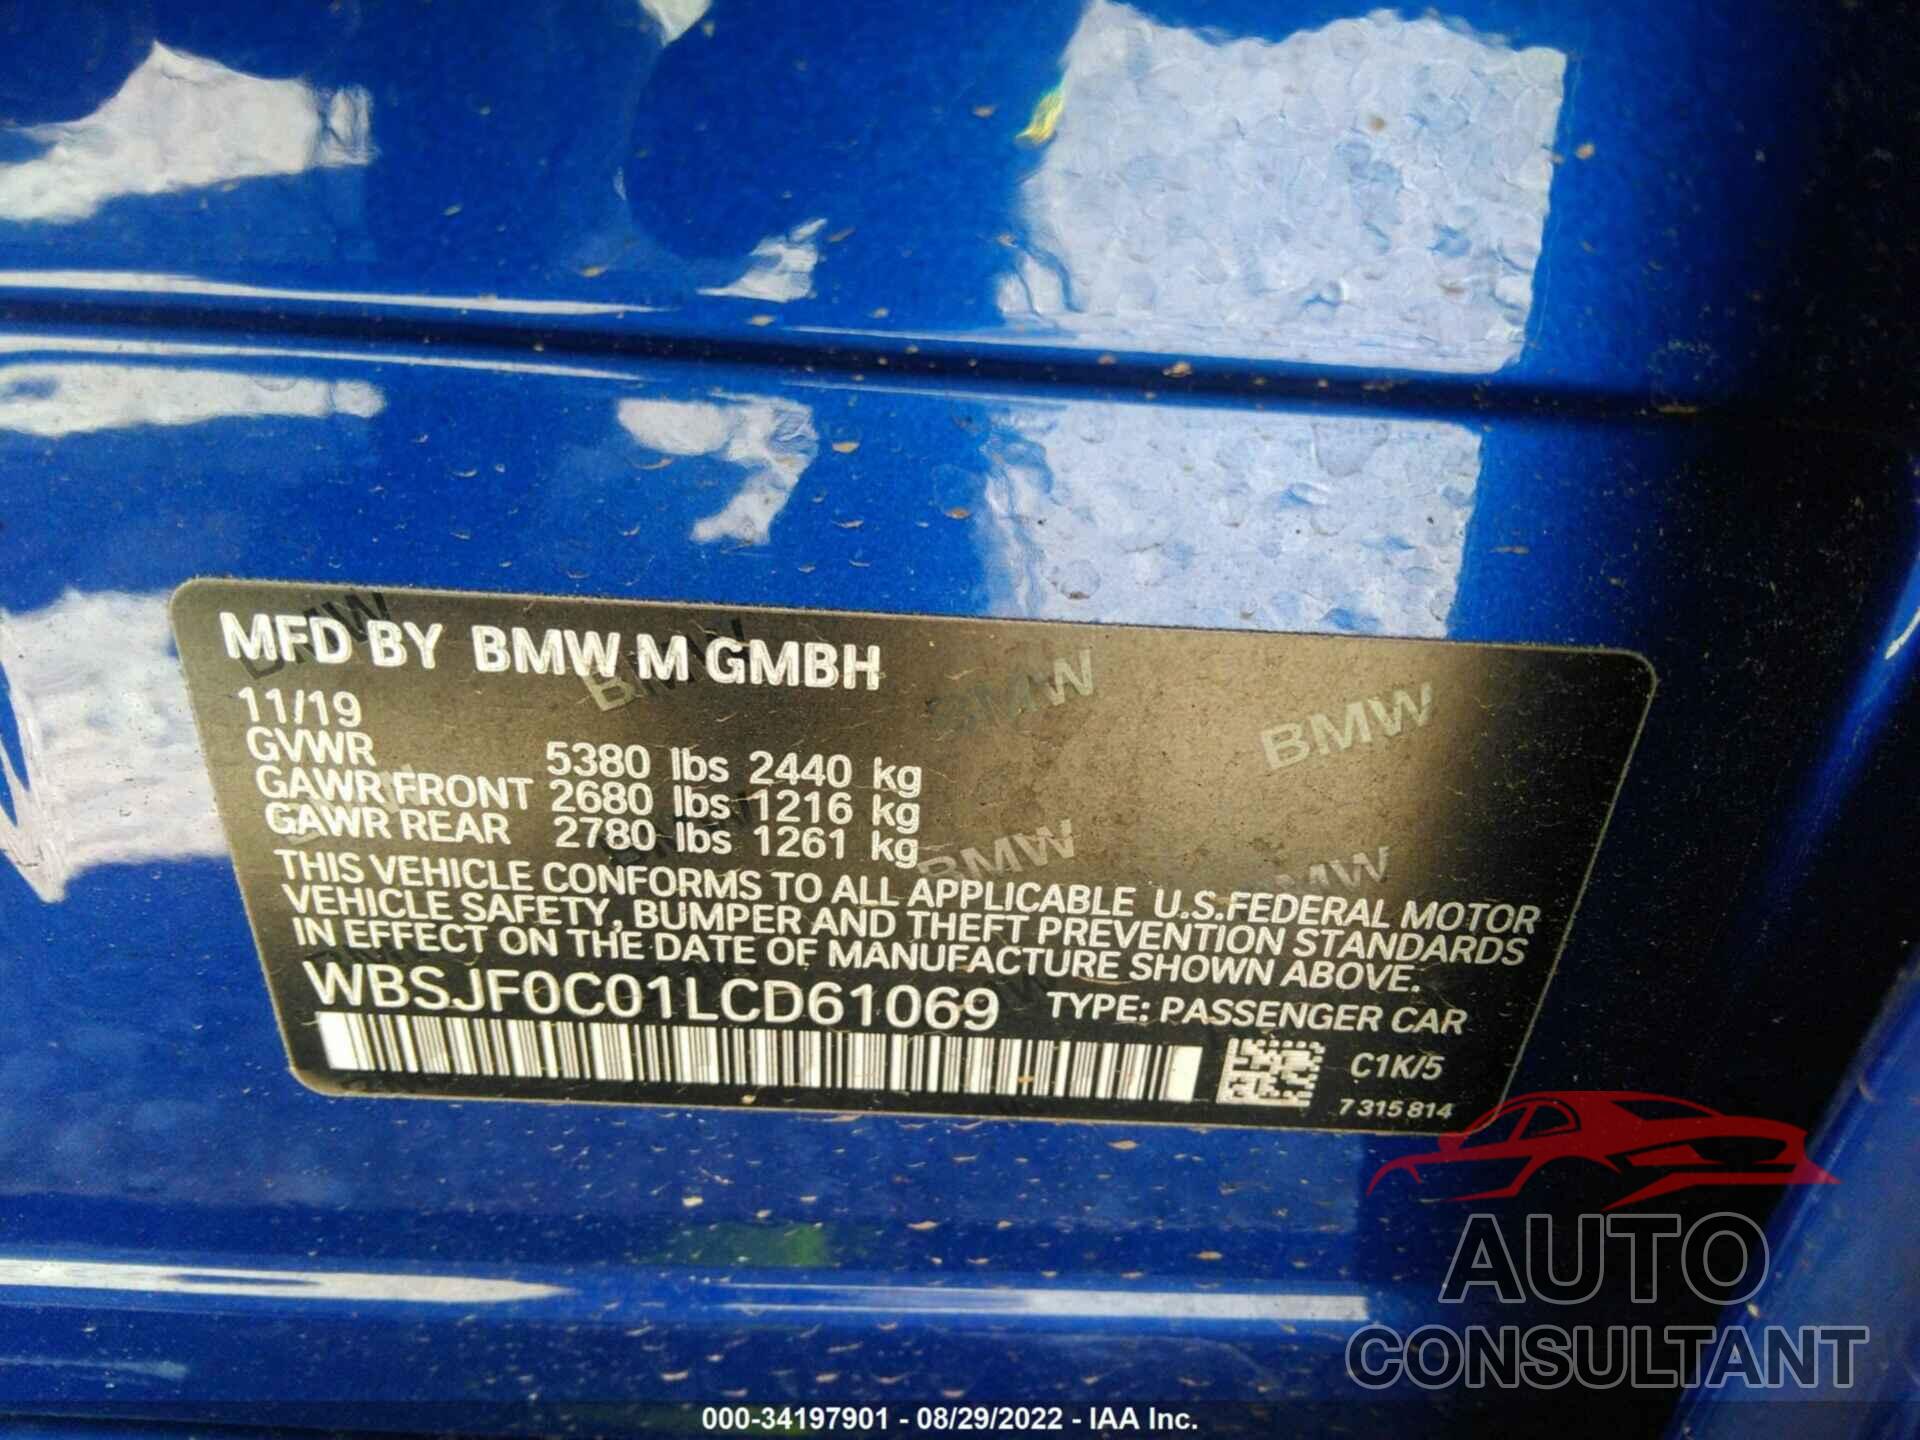 BMW M5 2020 - WBSJF0C01LCD61069